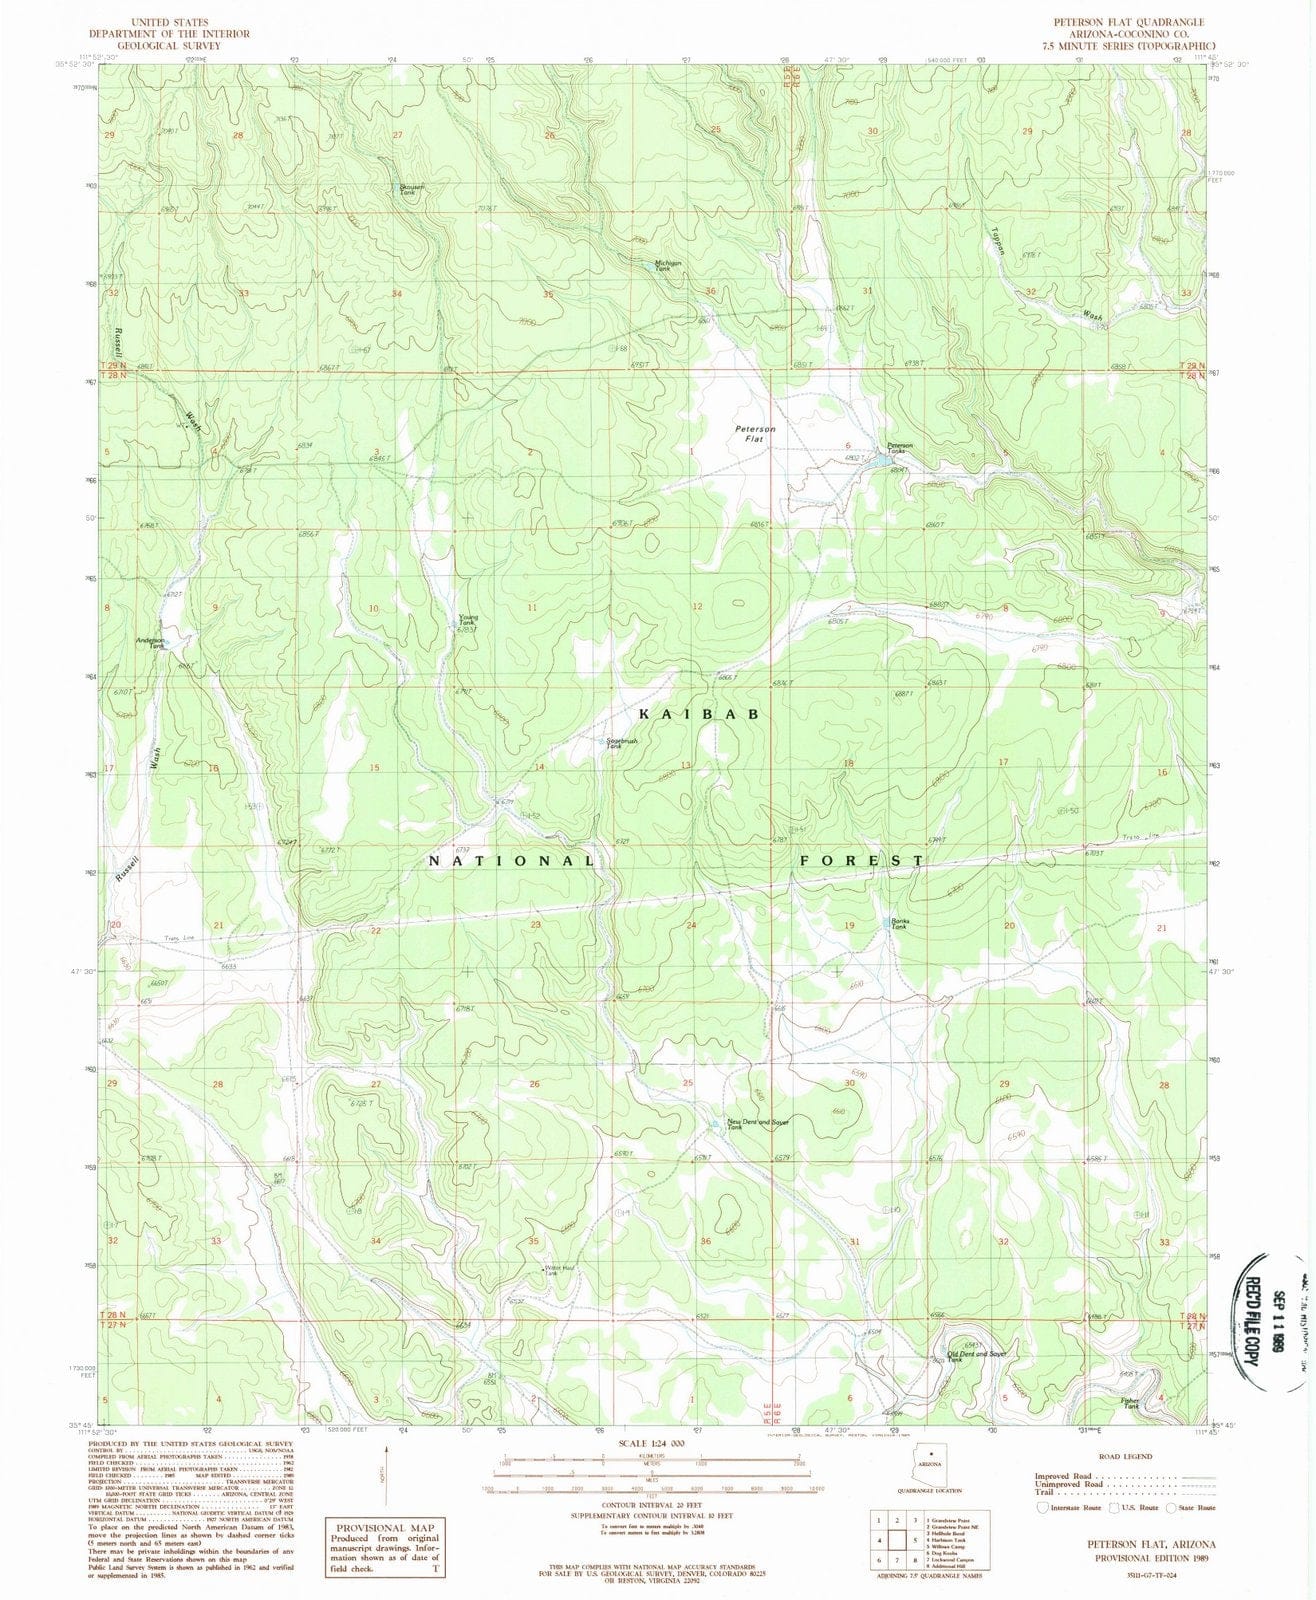 1989 Peterson Flat, AZ - Arizona - USGS Topographic Map